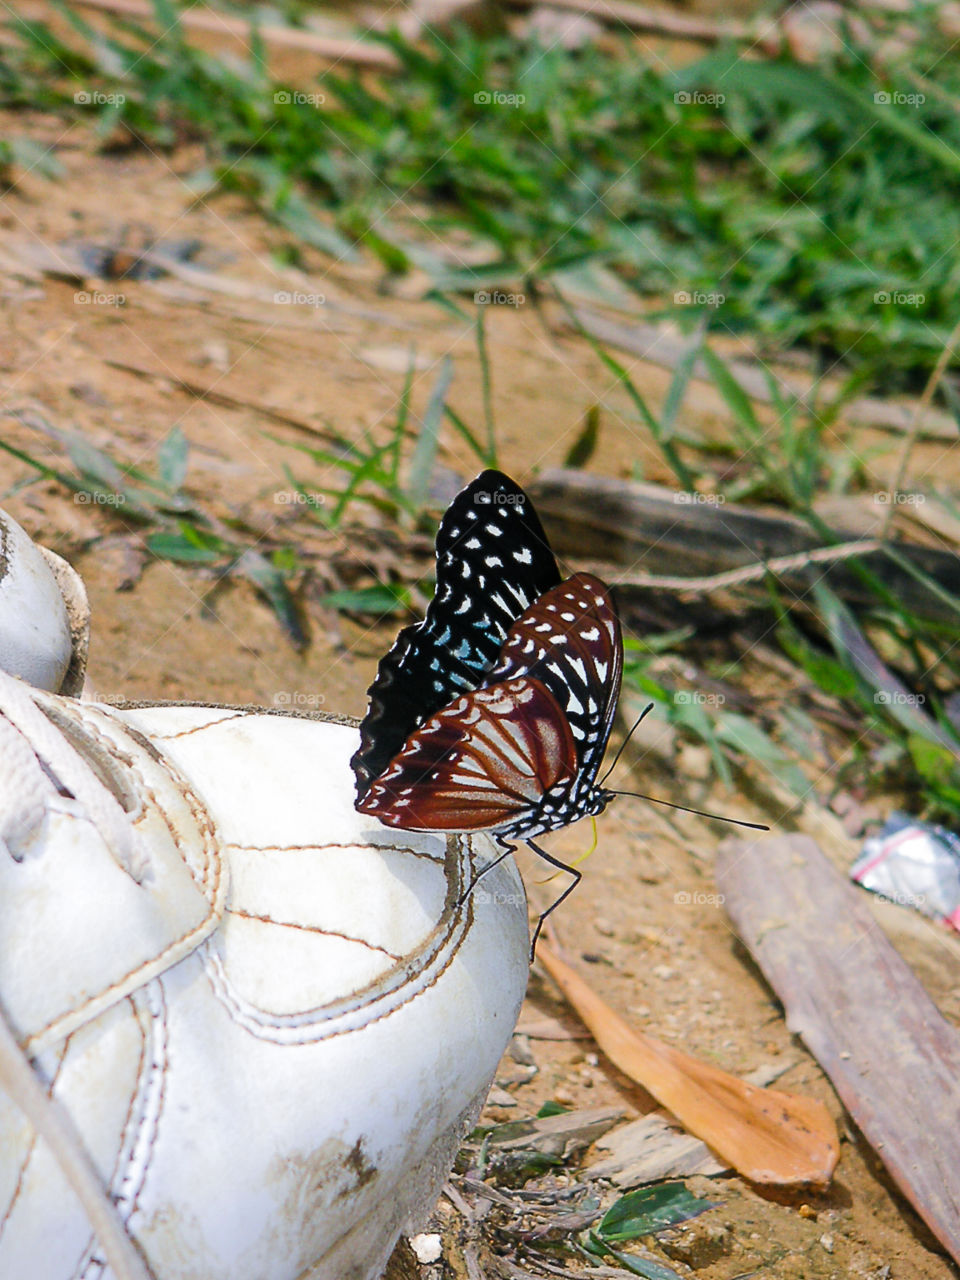 A butterfly on a shoe